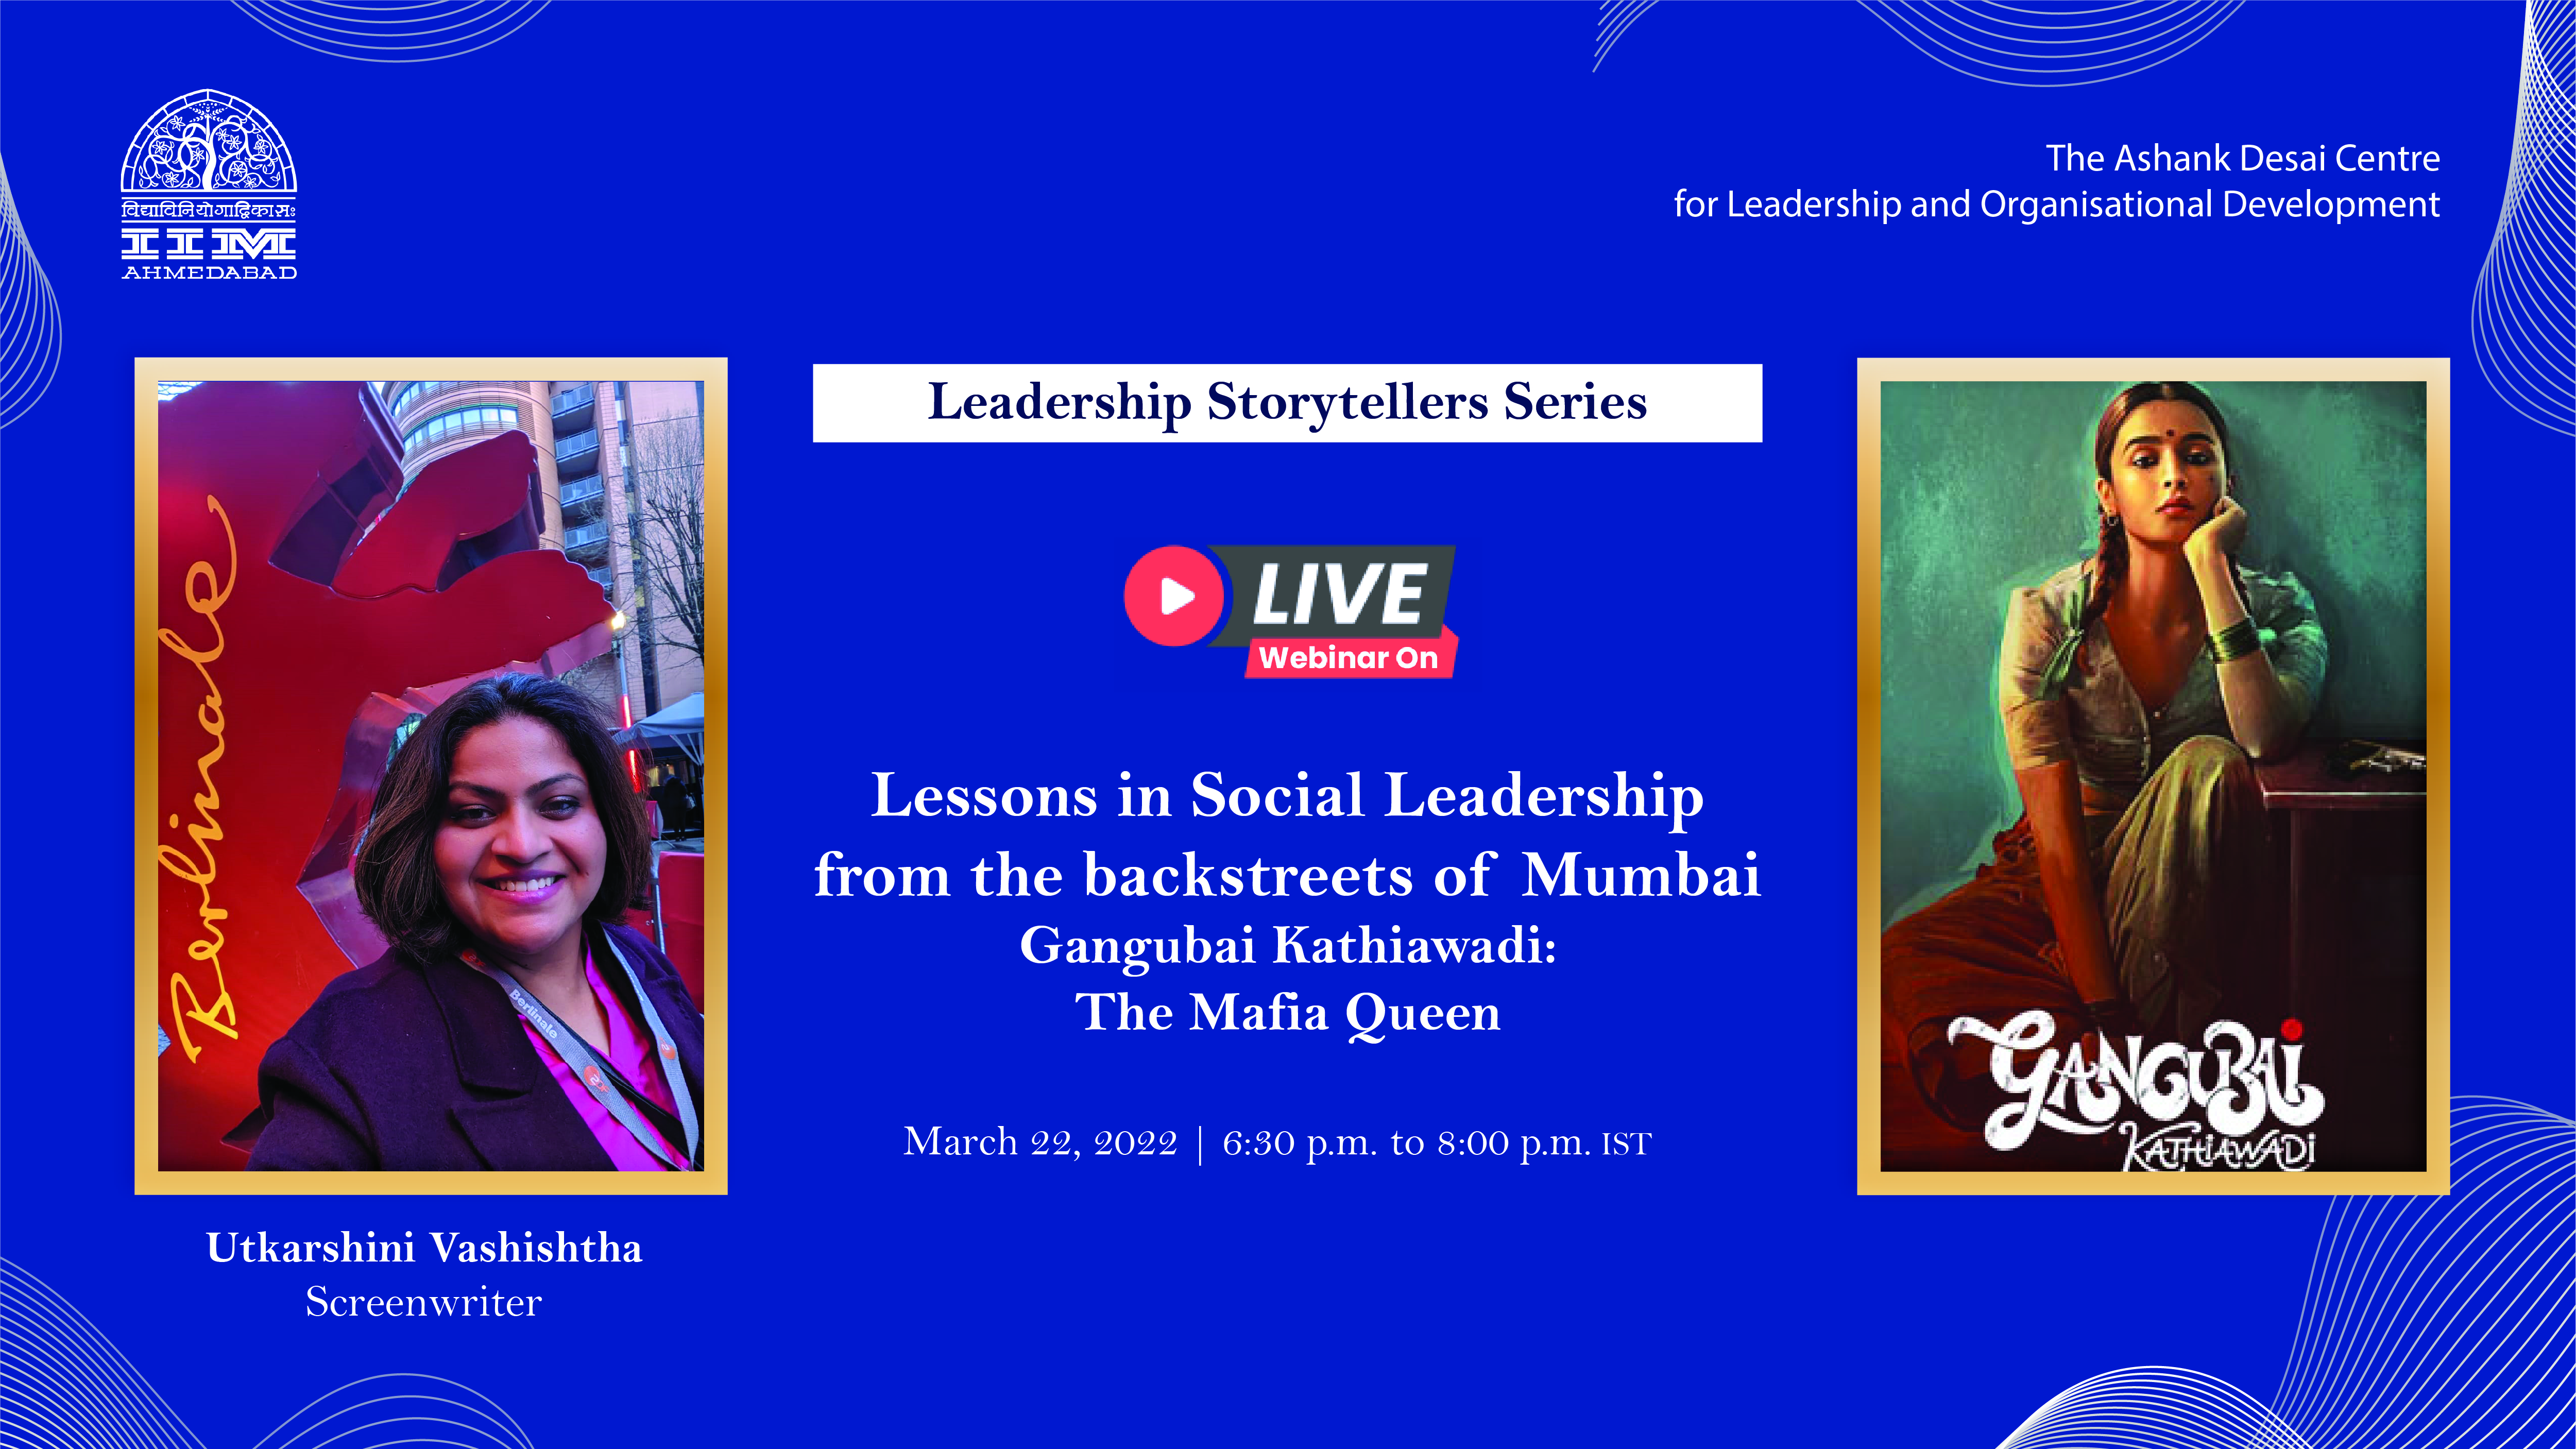 The Leadership Storytellers Series on “Lessons in Social Leadership from the backstreets of Mumbai | Gangubai Kathiawadi: The Mafia Queen”